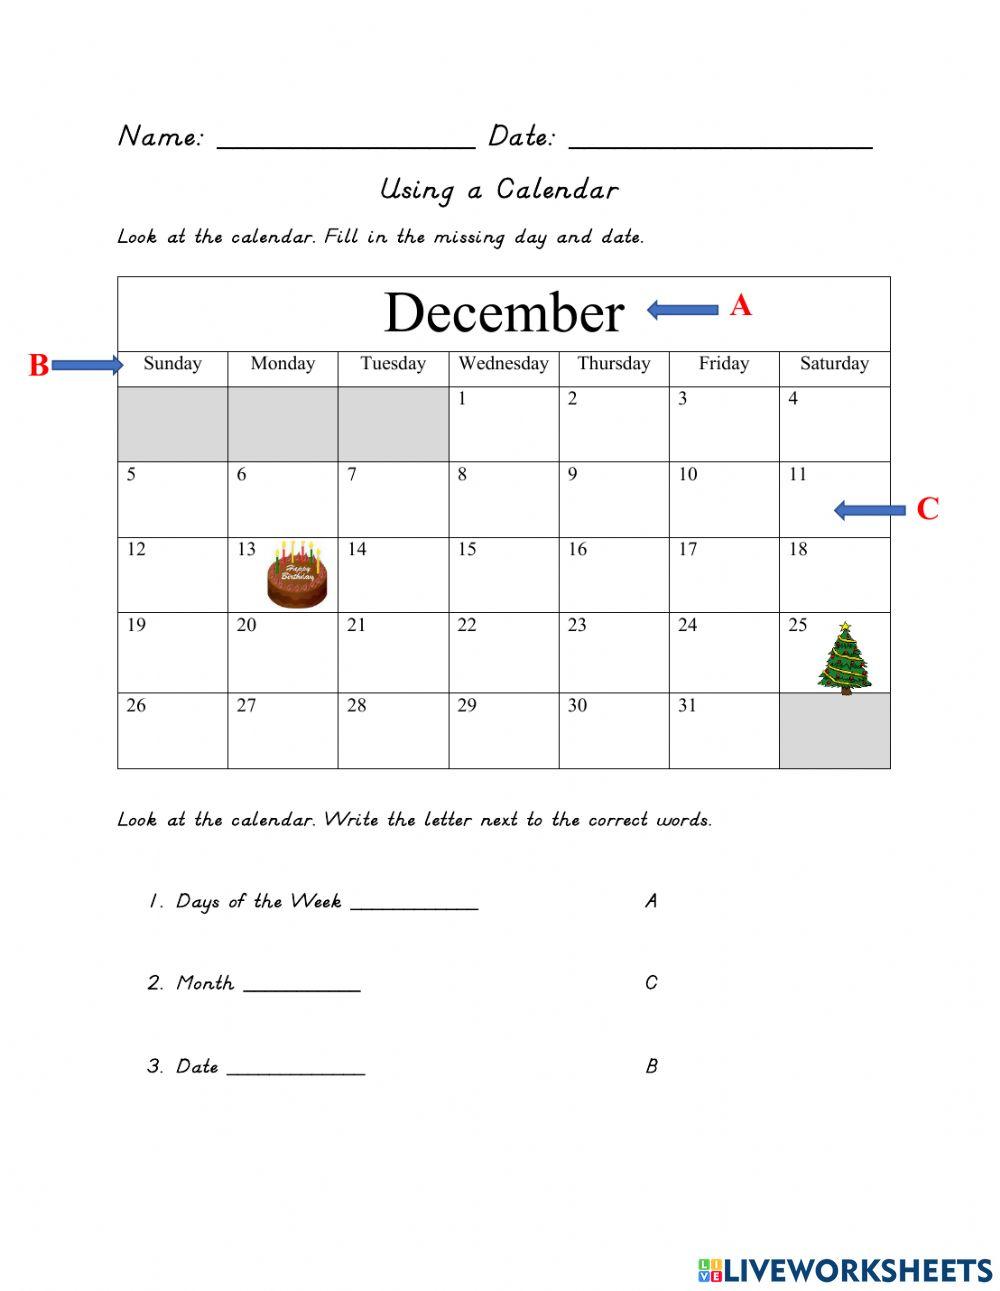 Using a Calendar 3